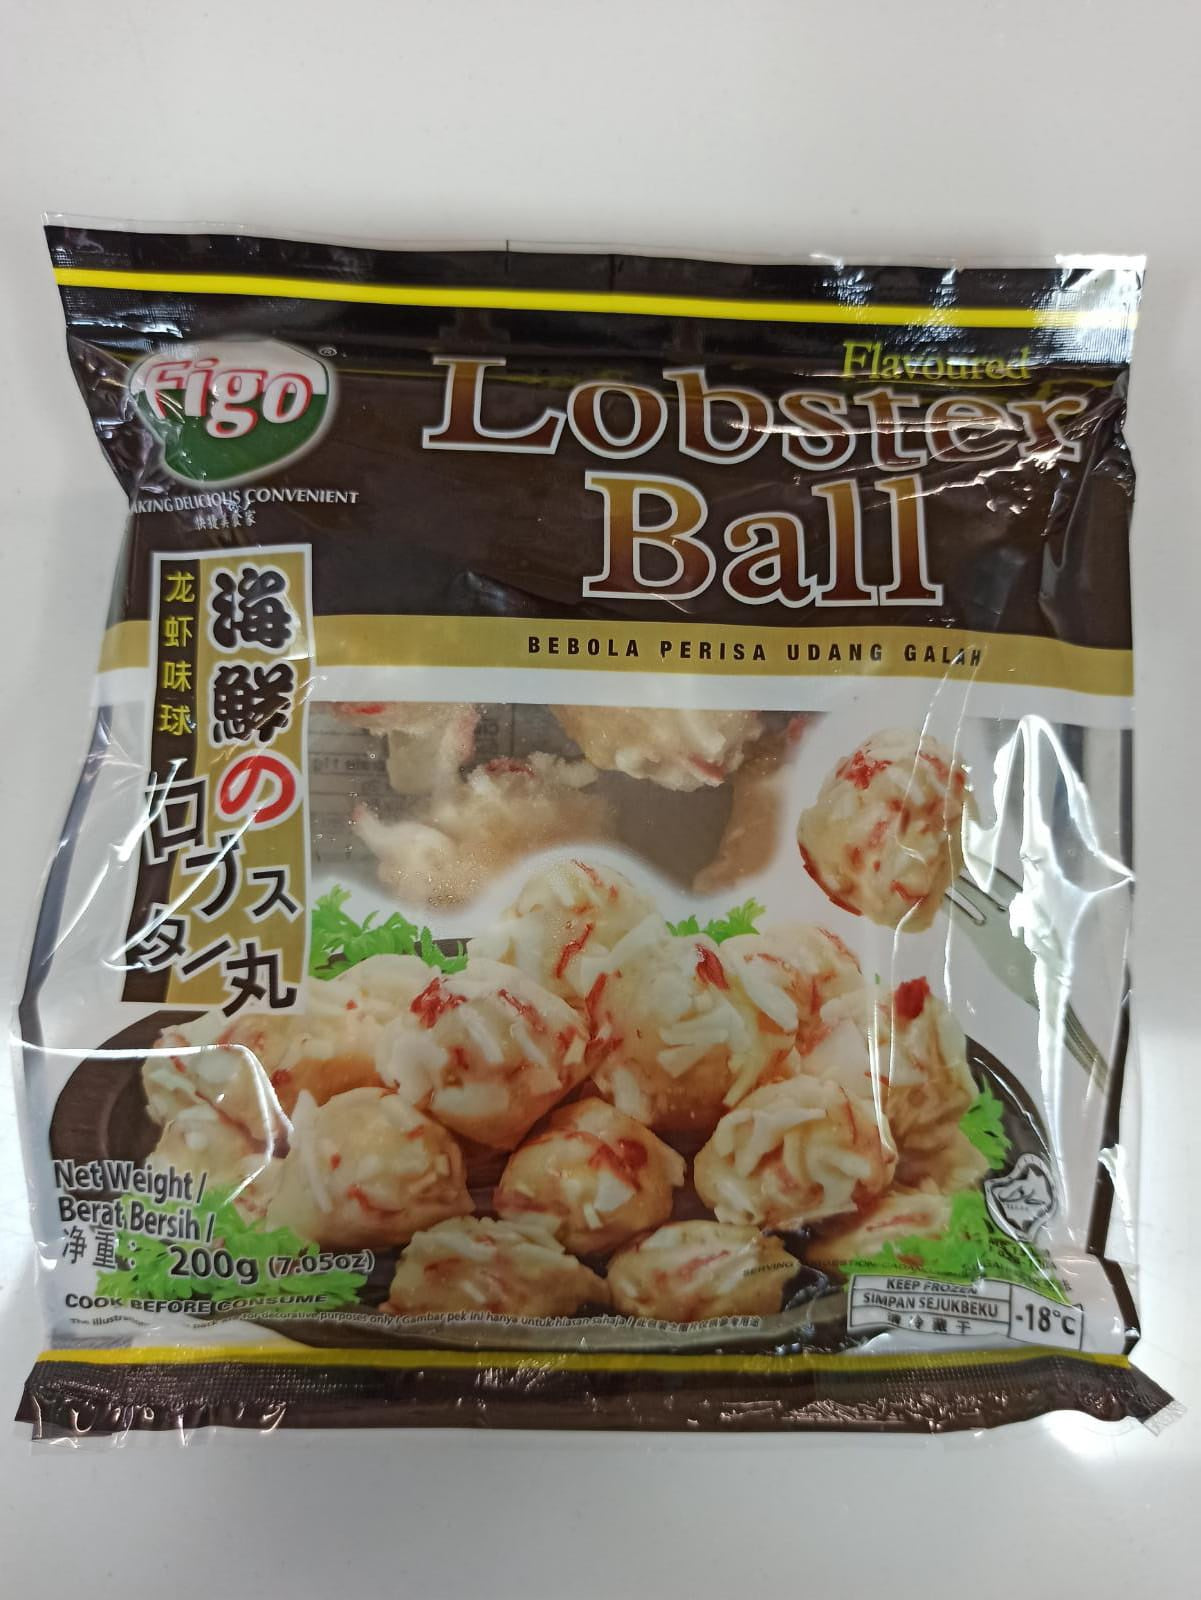 FIGO Lobster Ball 飛哥龍蝦丸 Qua bong tom hum 200g x 1